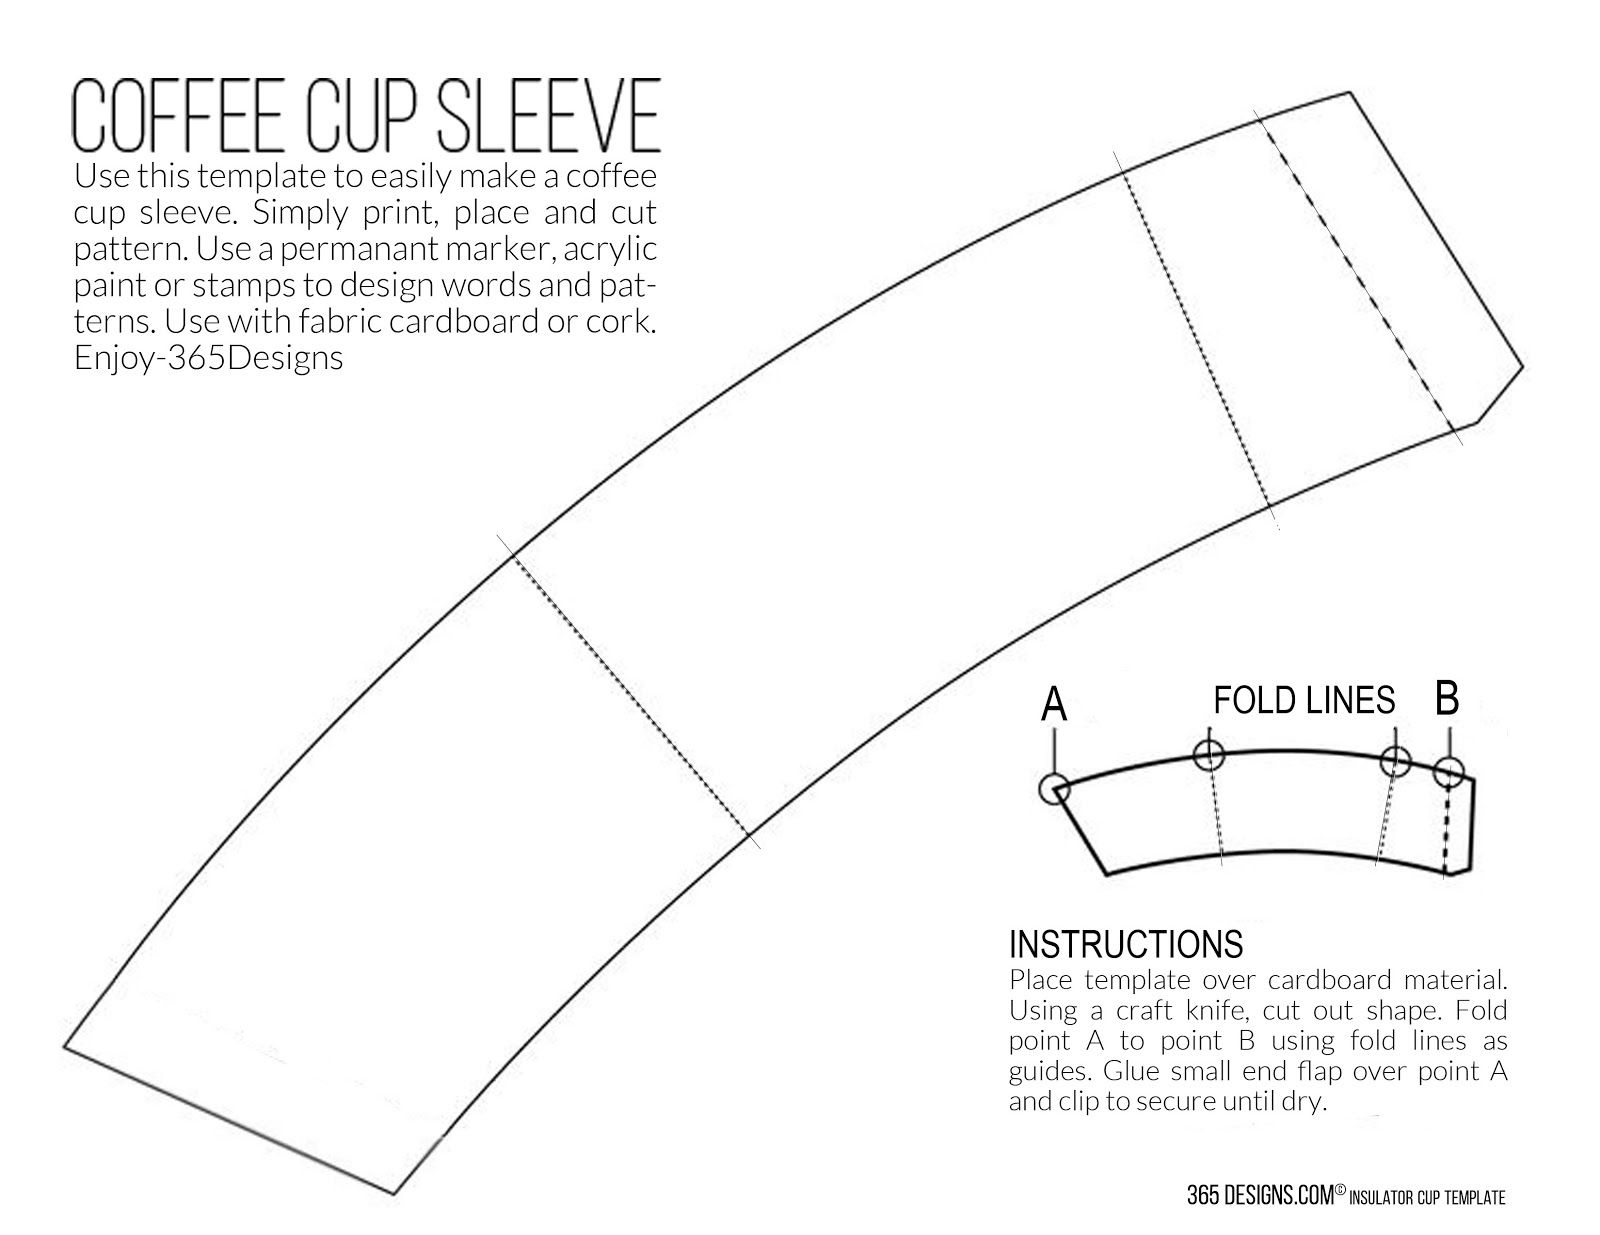 New McCaf Single Brew Coffee With Printable Cup Sleeve Template Coffee Sleeve Coffee Cup Sleeves Diy Coffee Sleeve